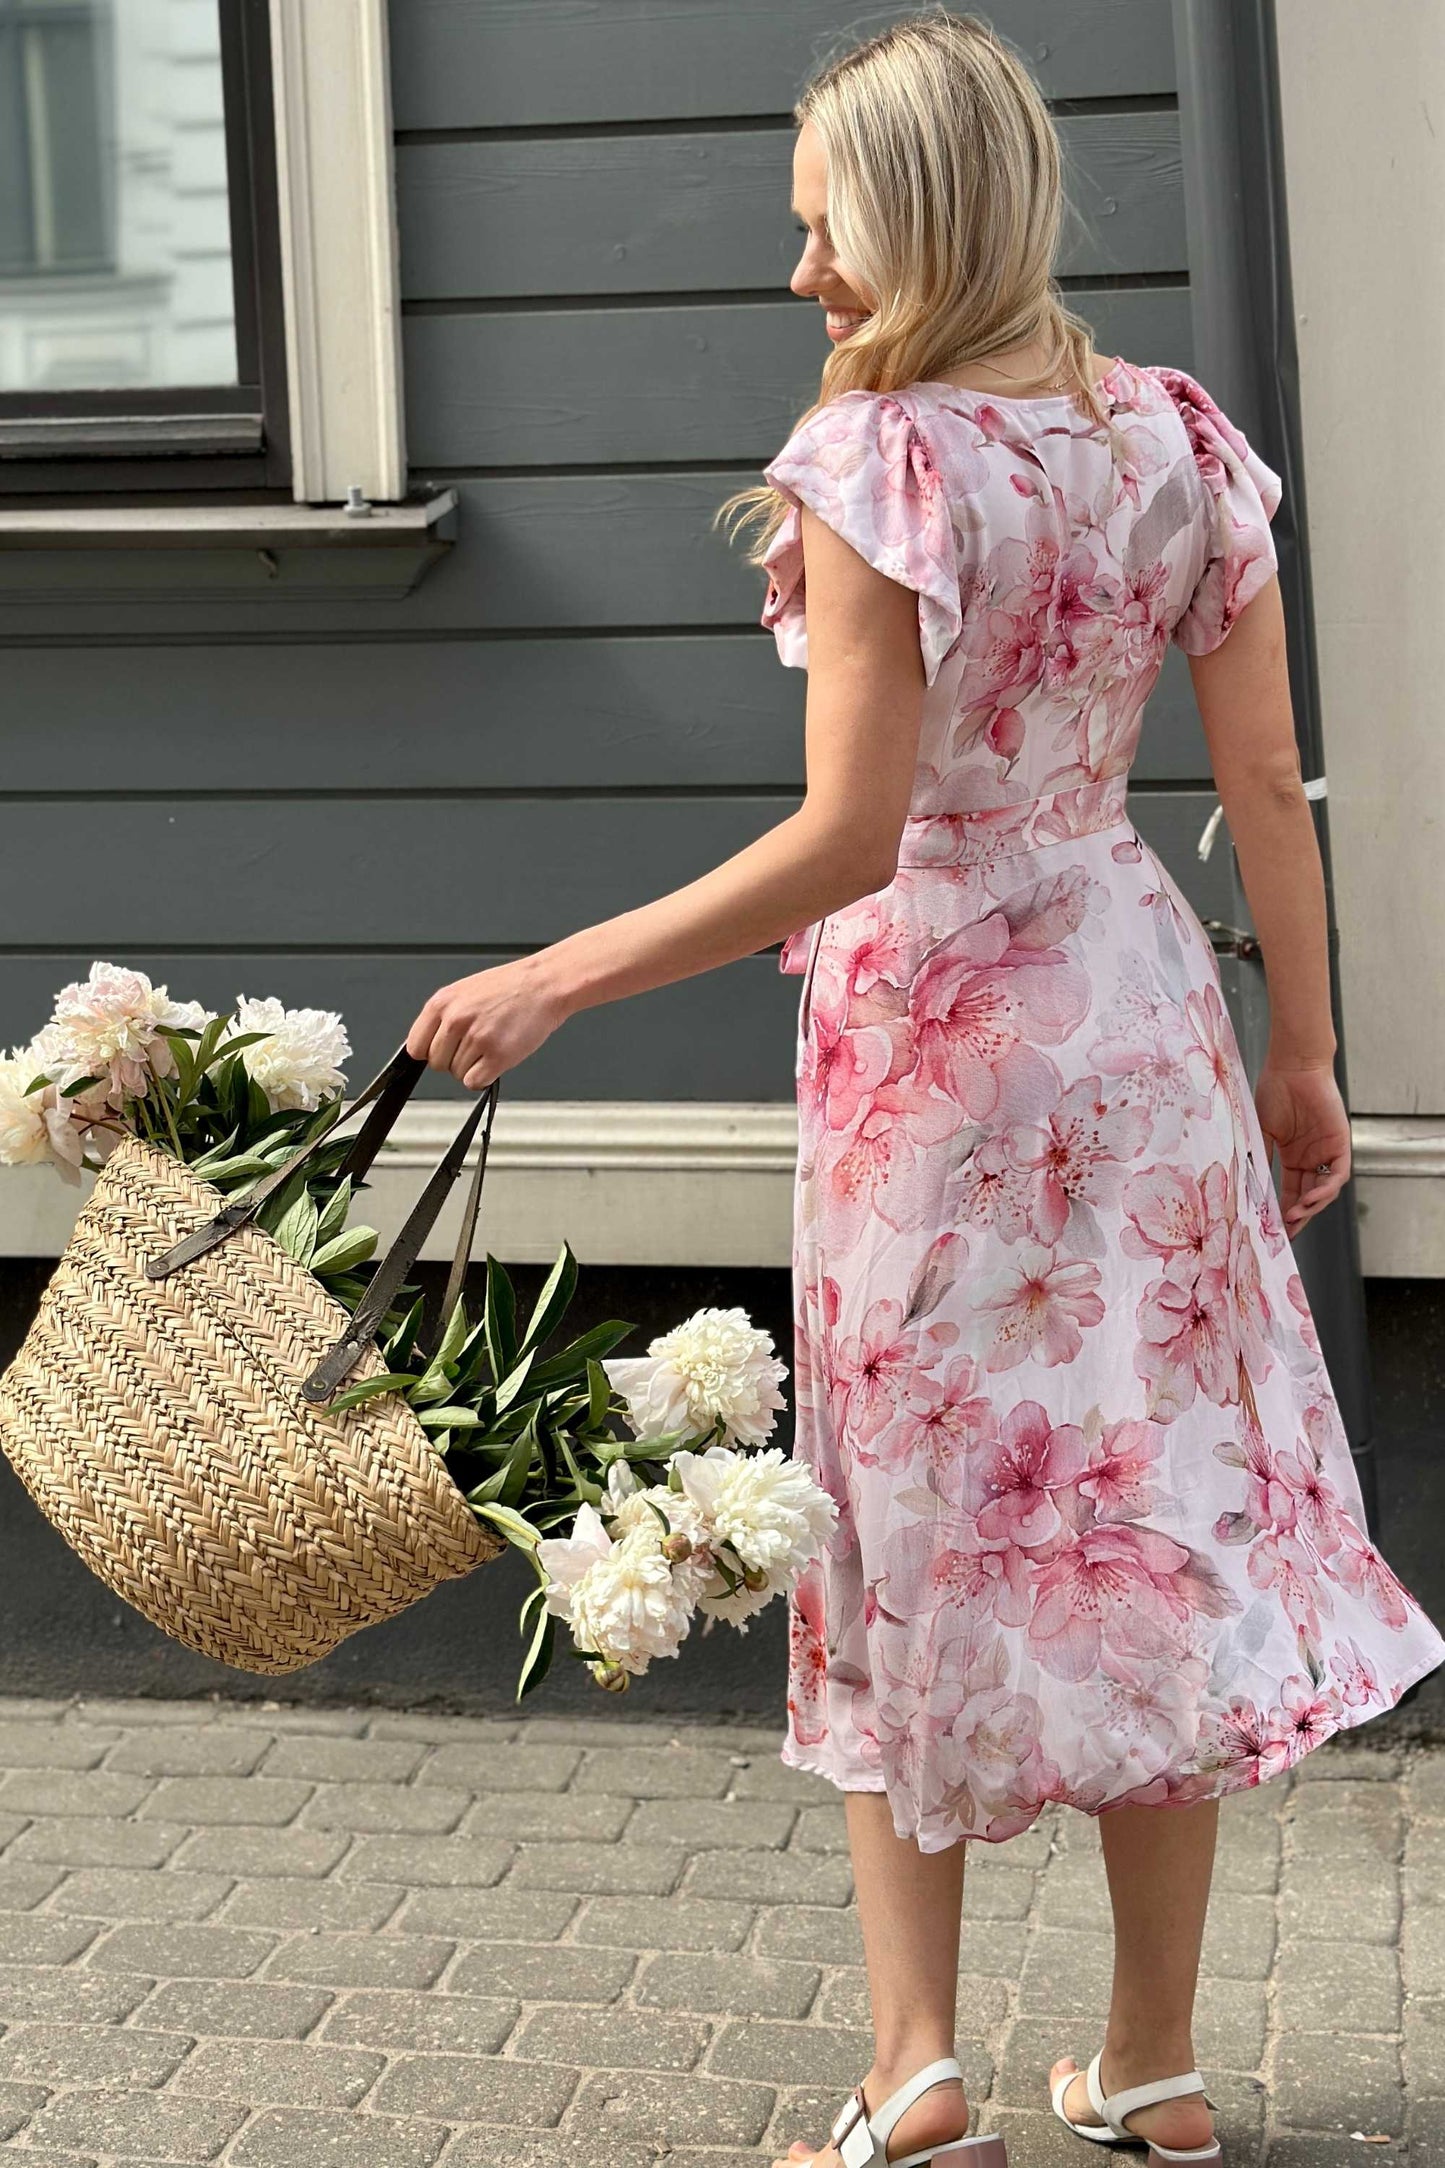 Romantic women's dress with flowers